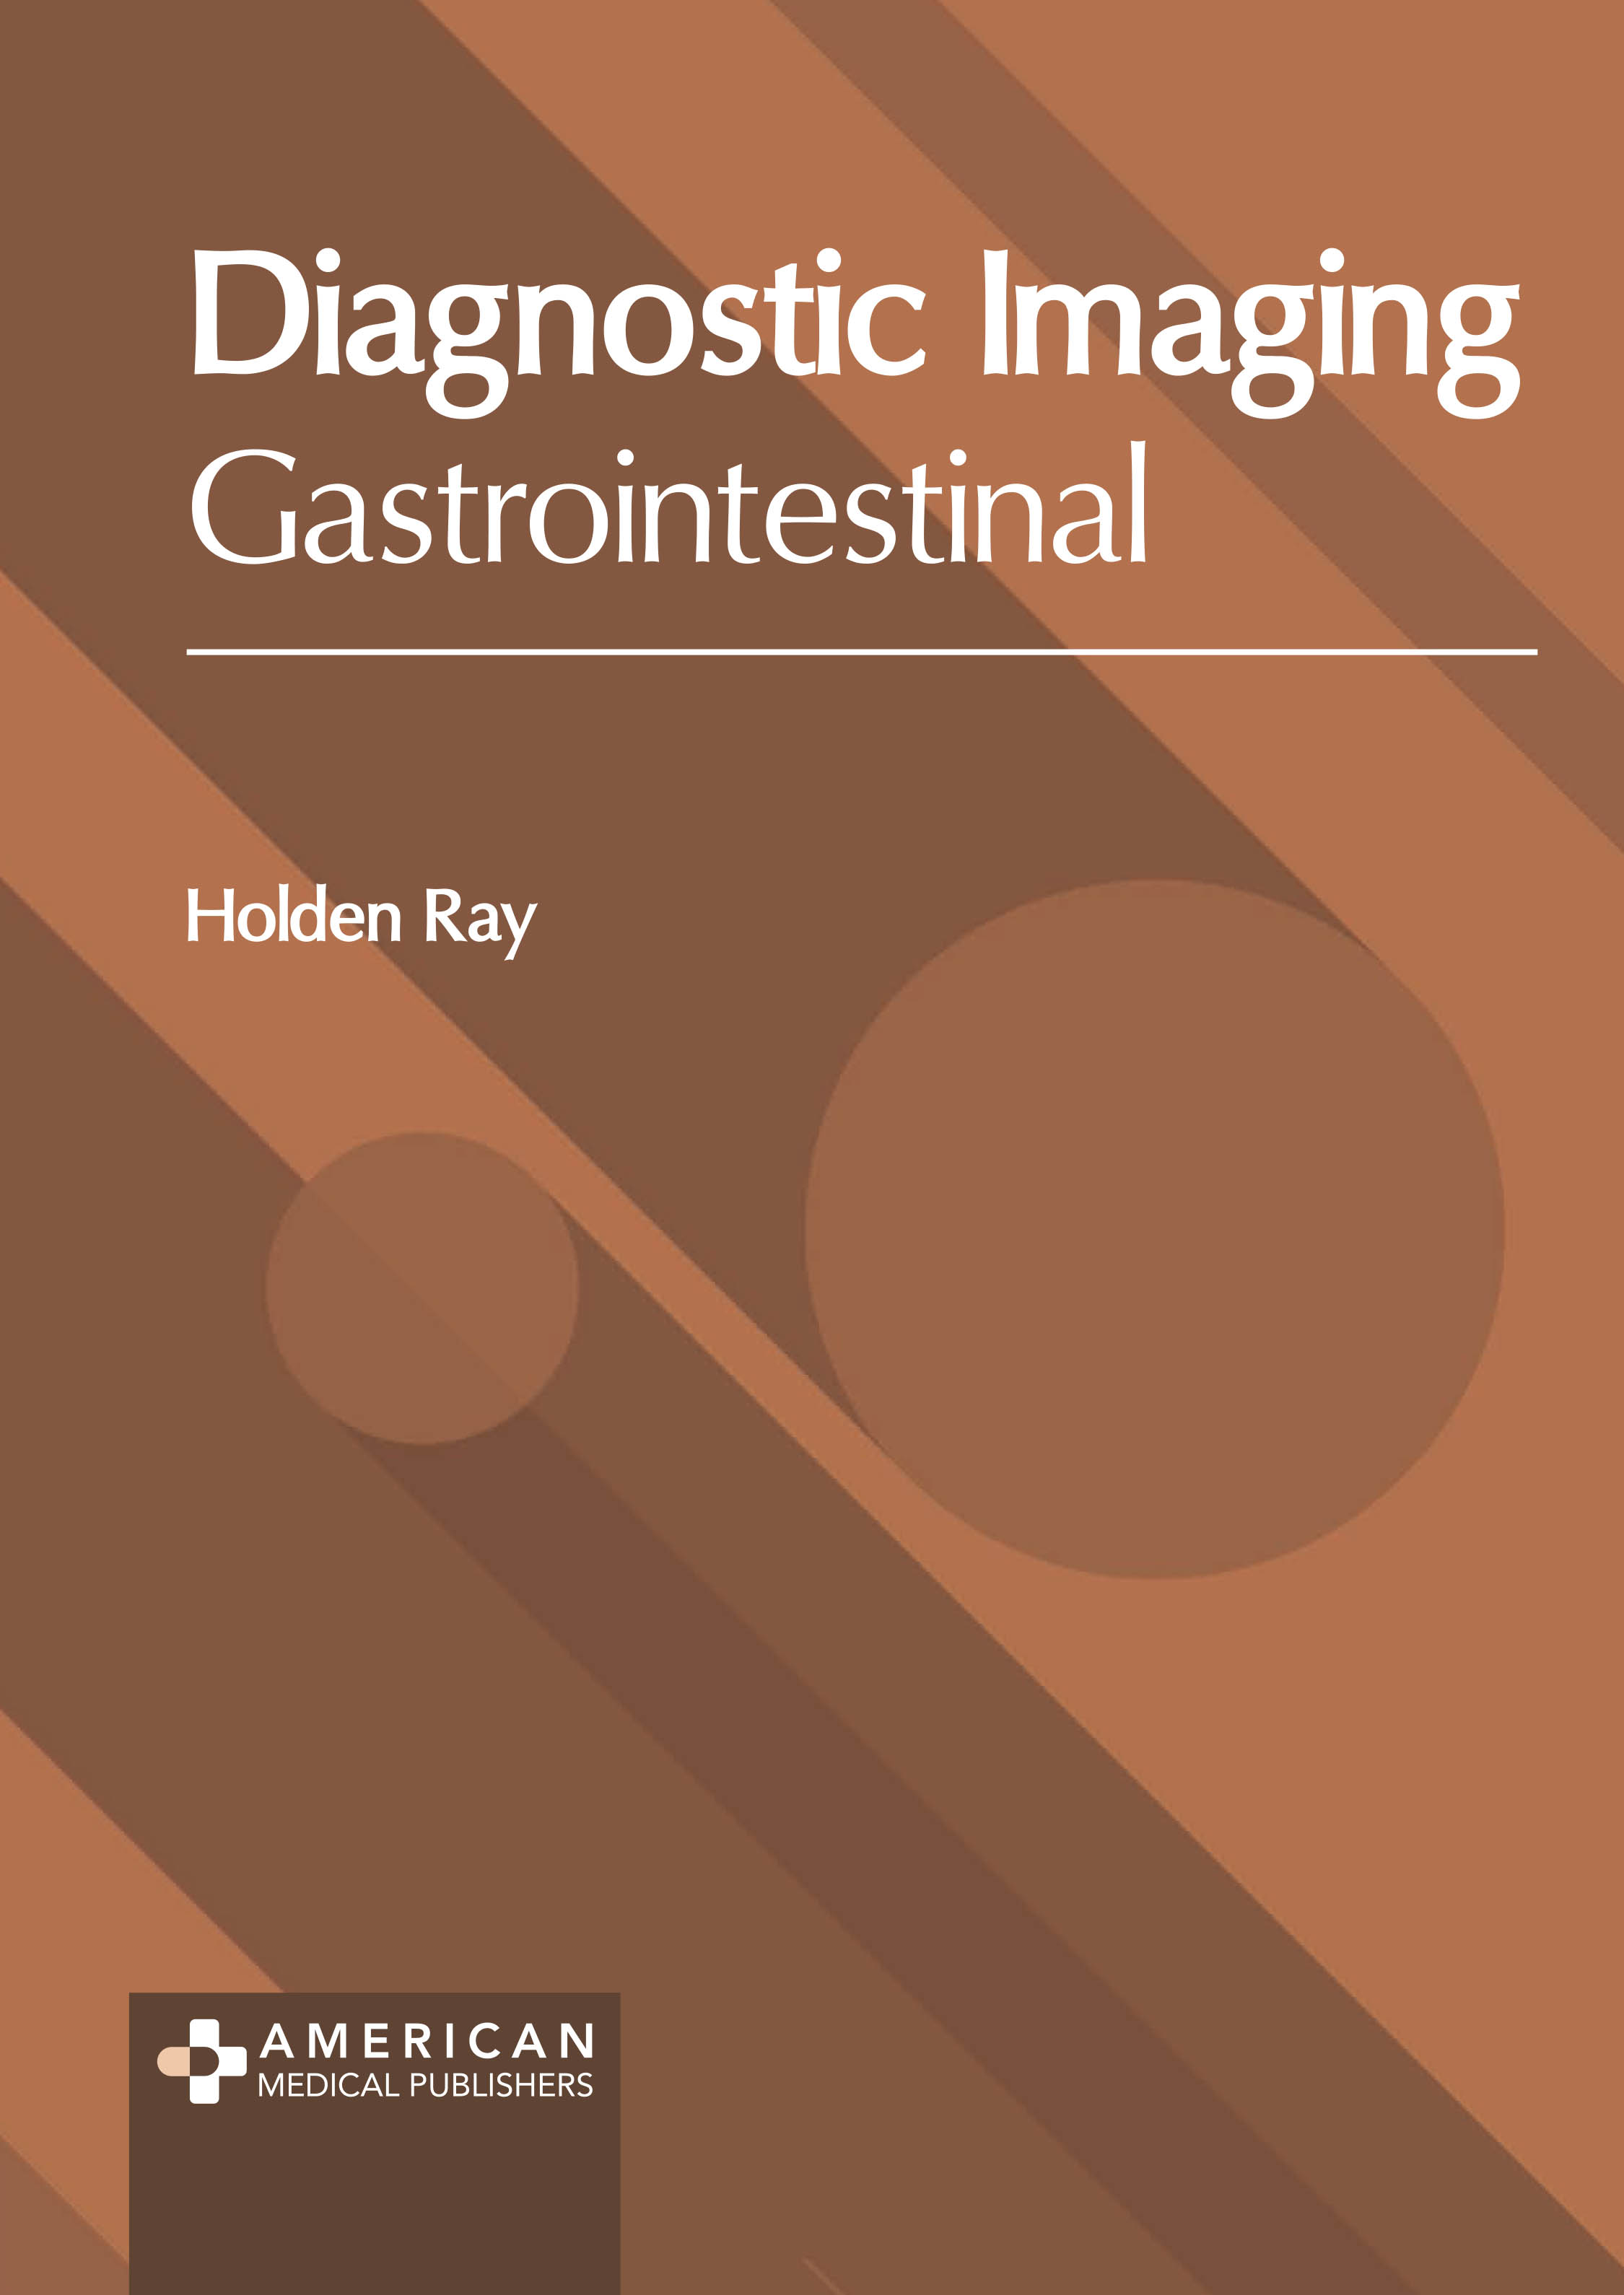 DIAGNOSTIC IMAGING: GASTROINTESTINAL